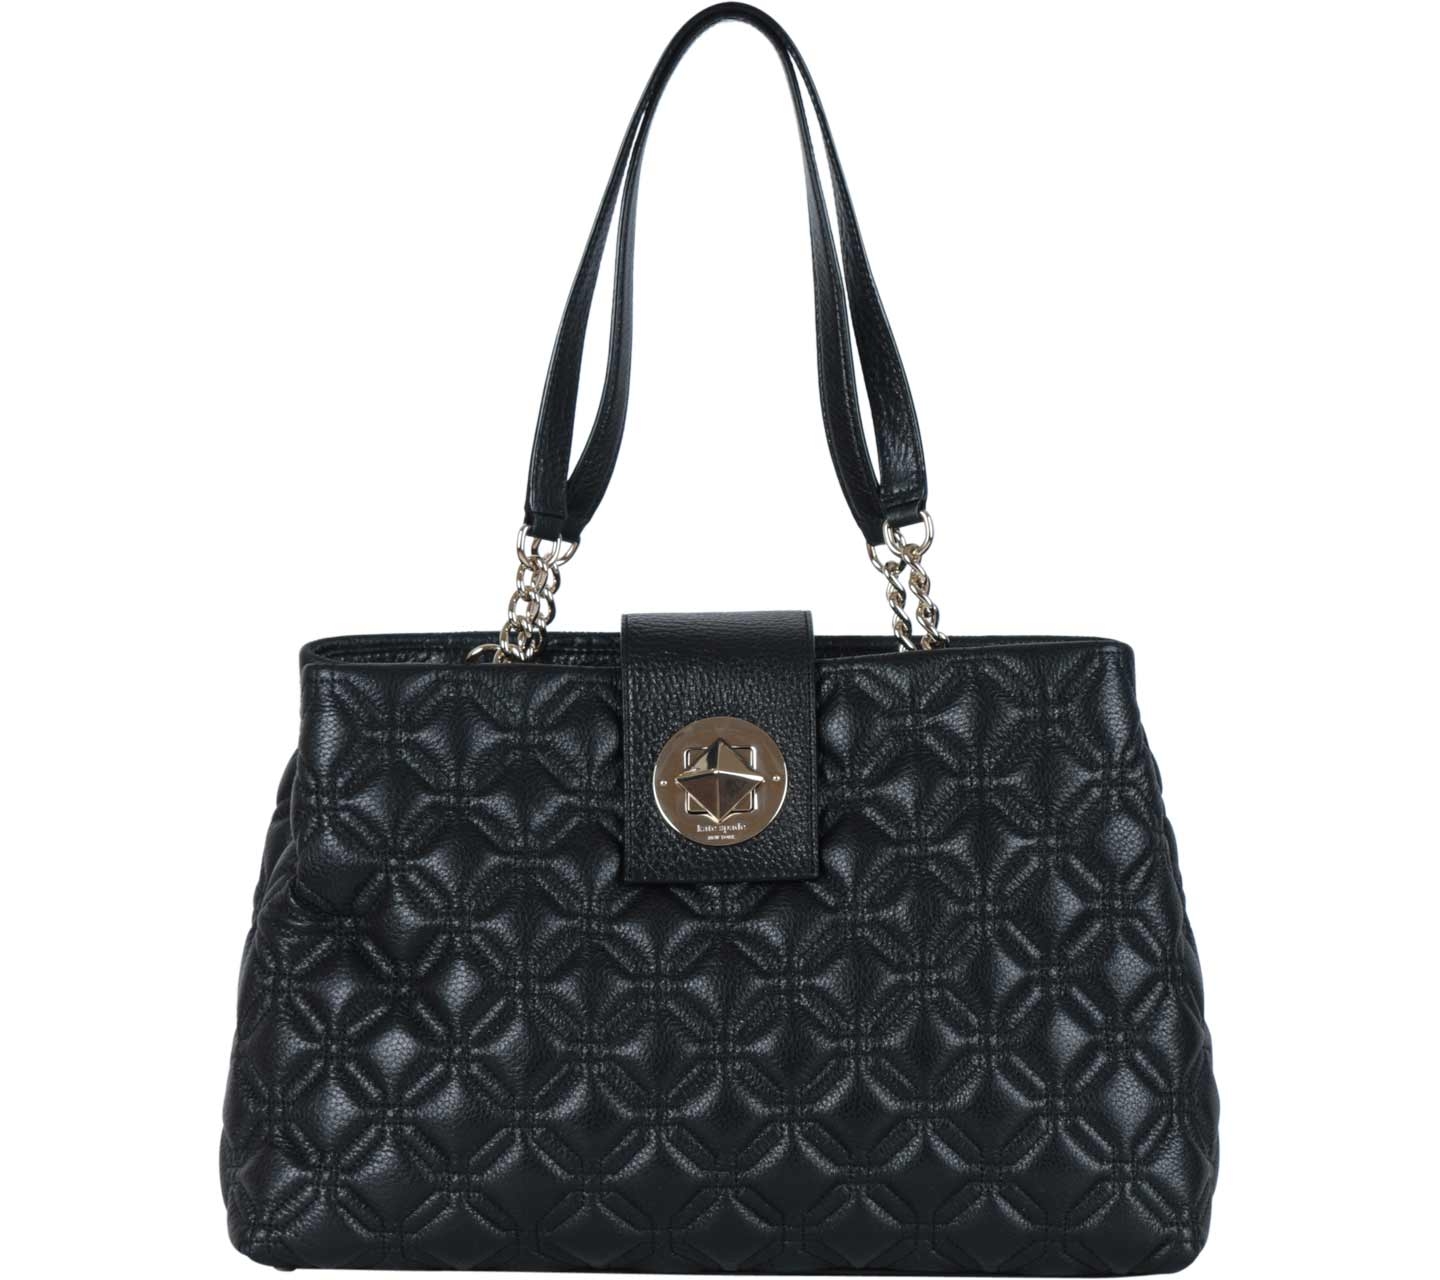 Kate Spade Black Astor Court Handbag